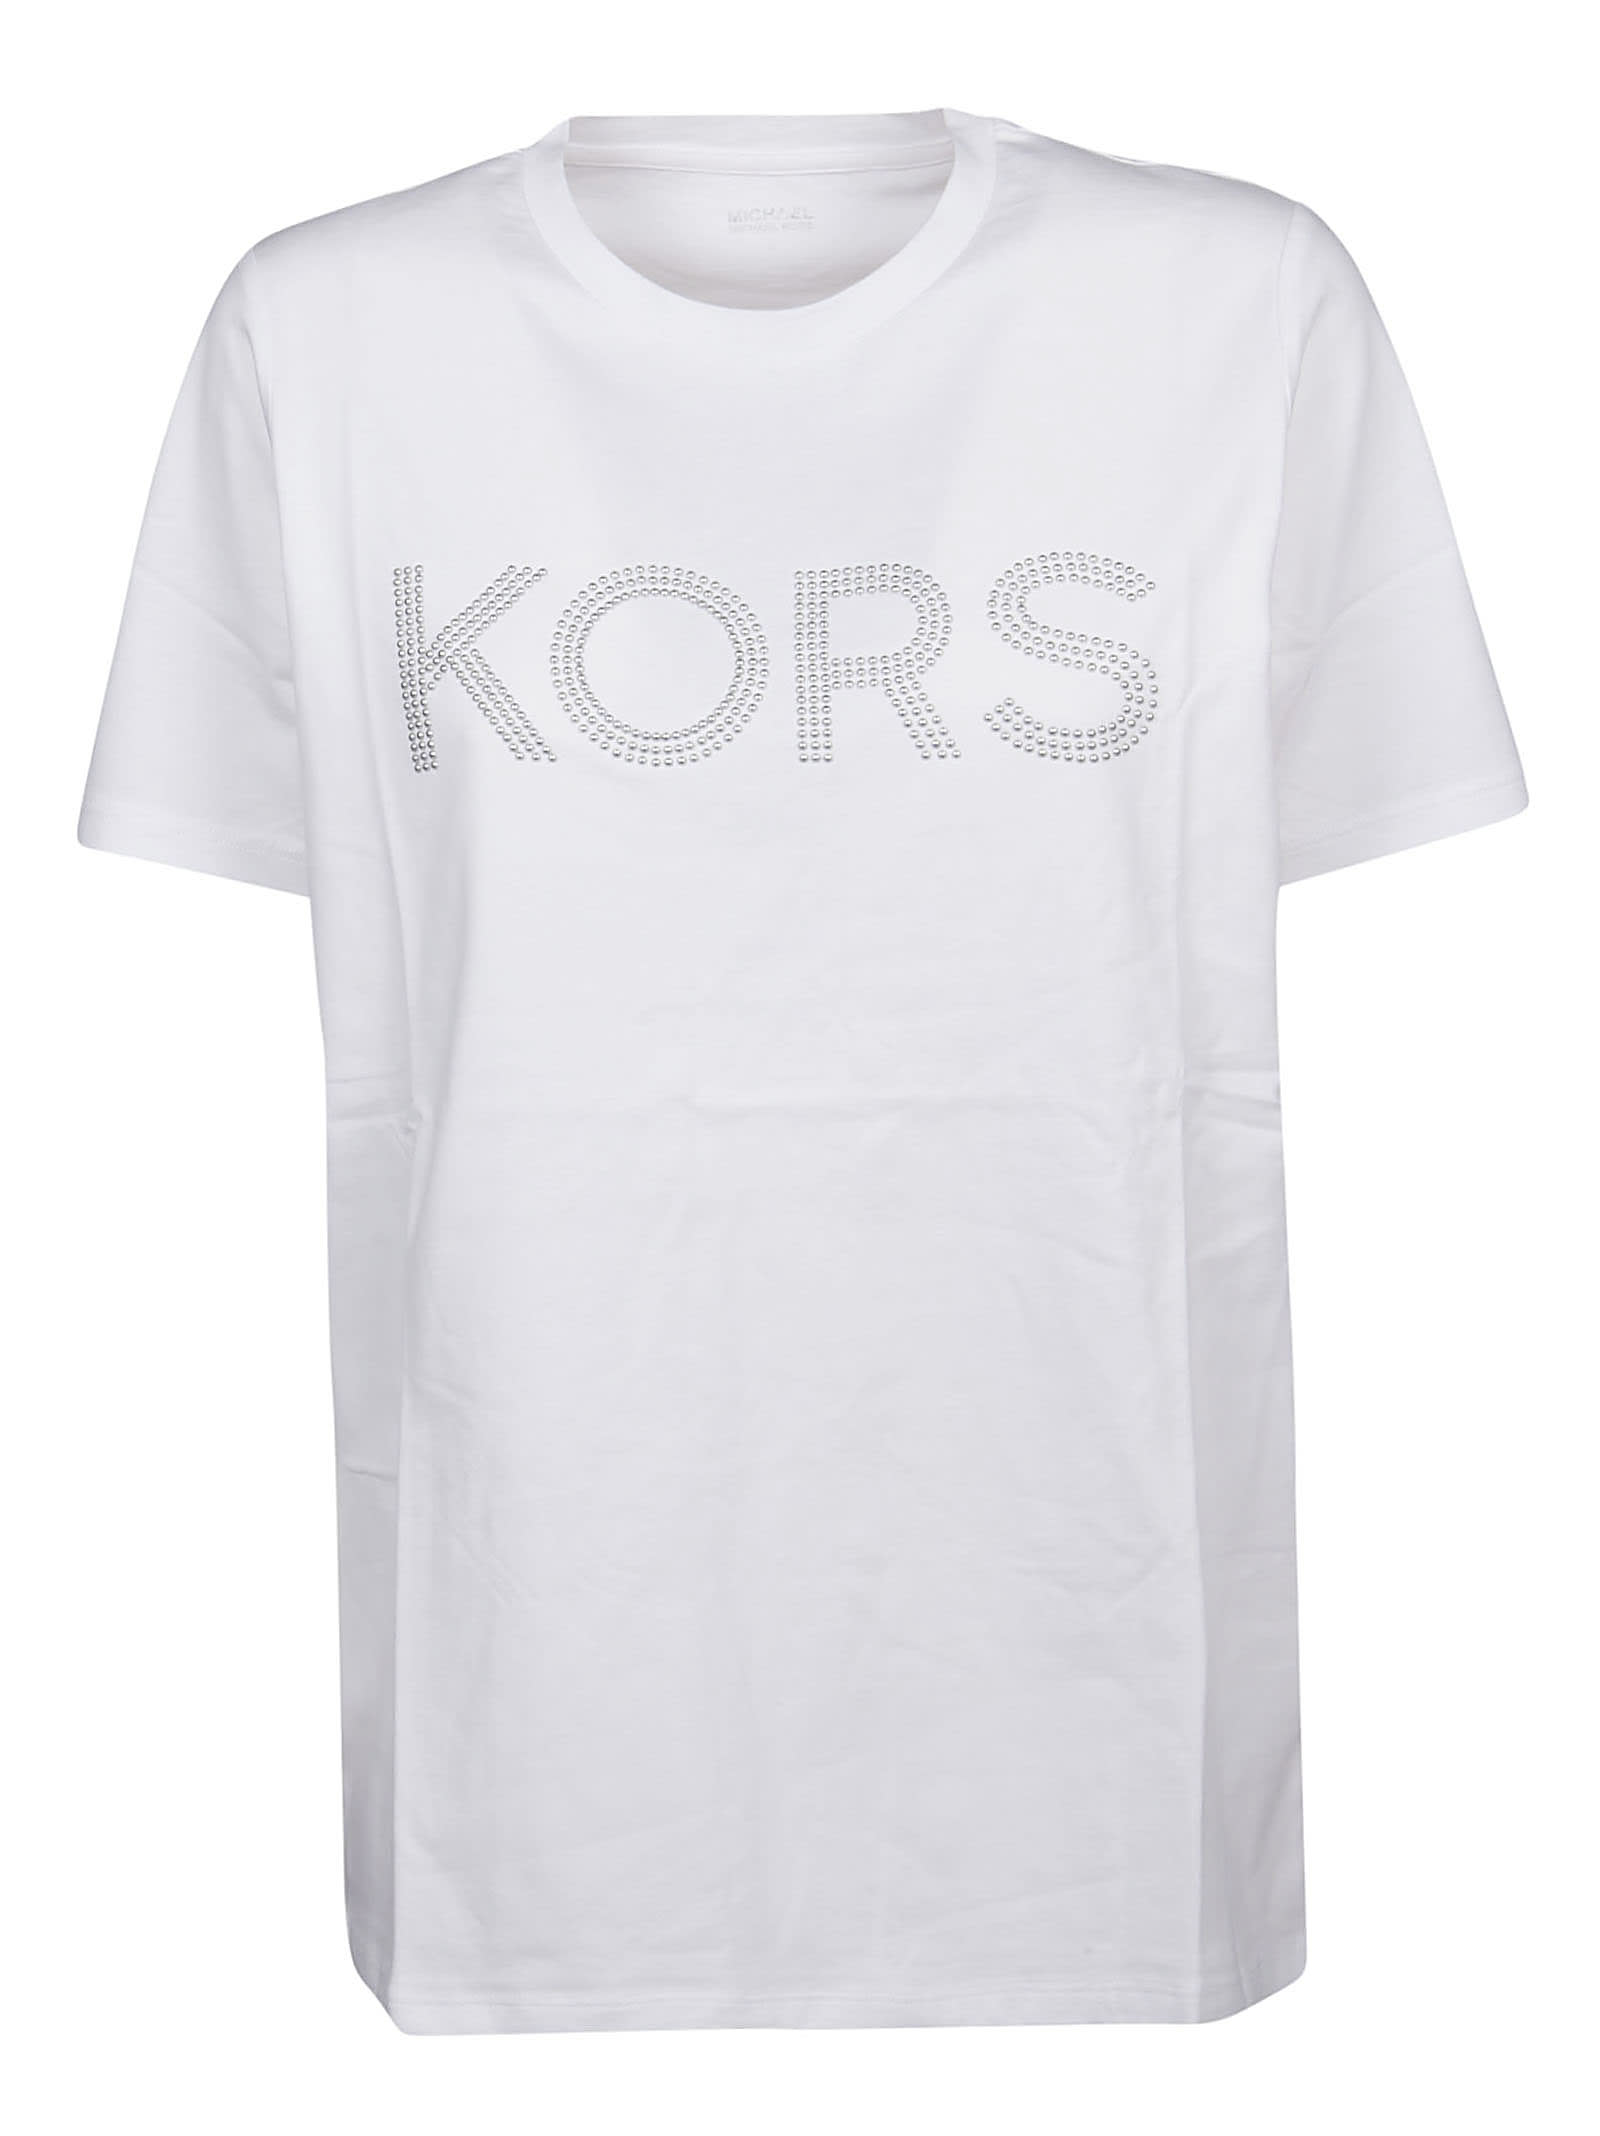 Michael Kors T-shirt Kors Graphic